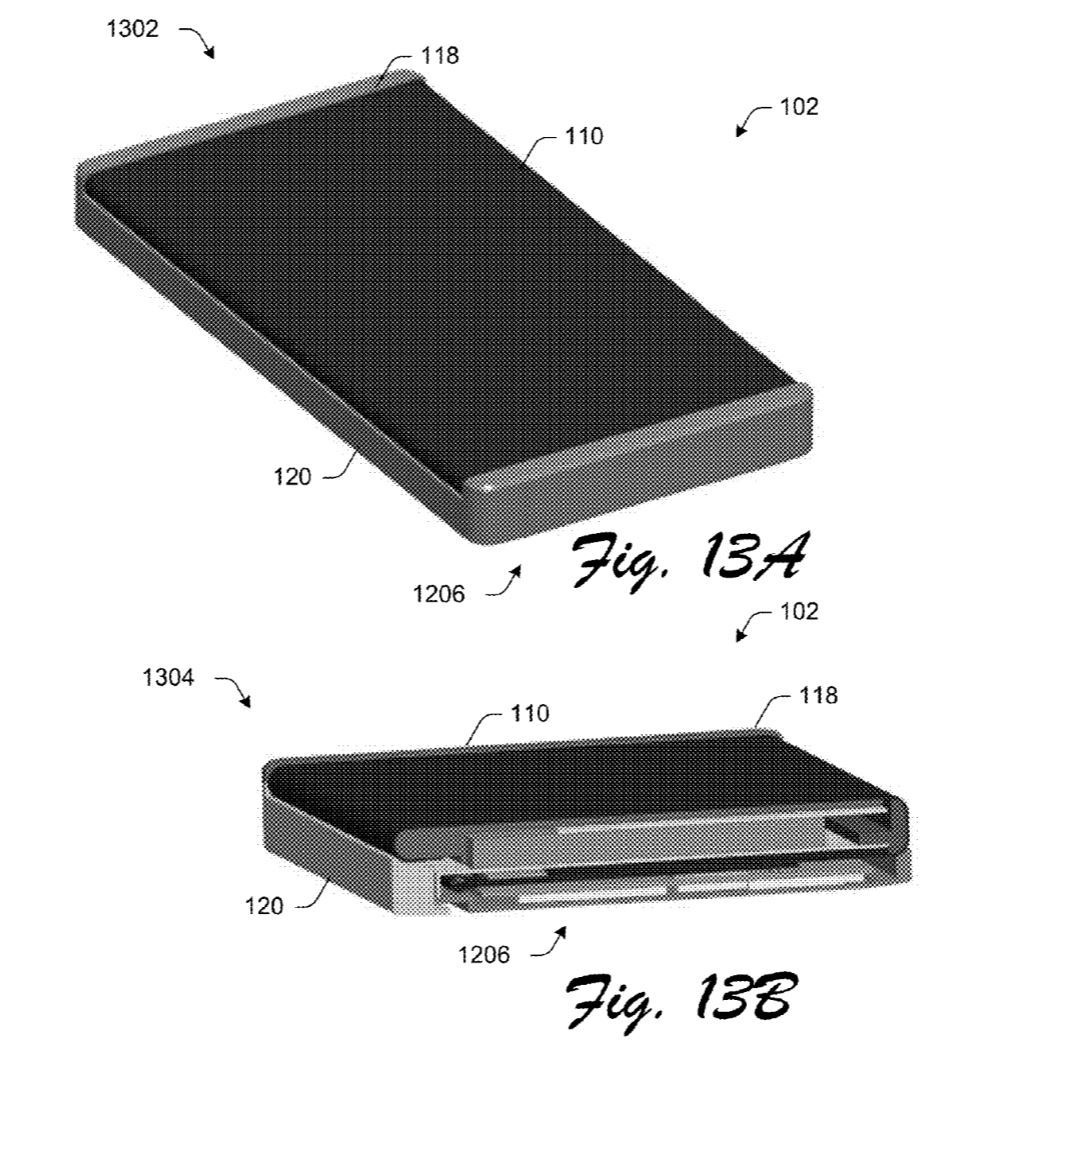 foldable-phone-patent-13.jpg